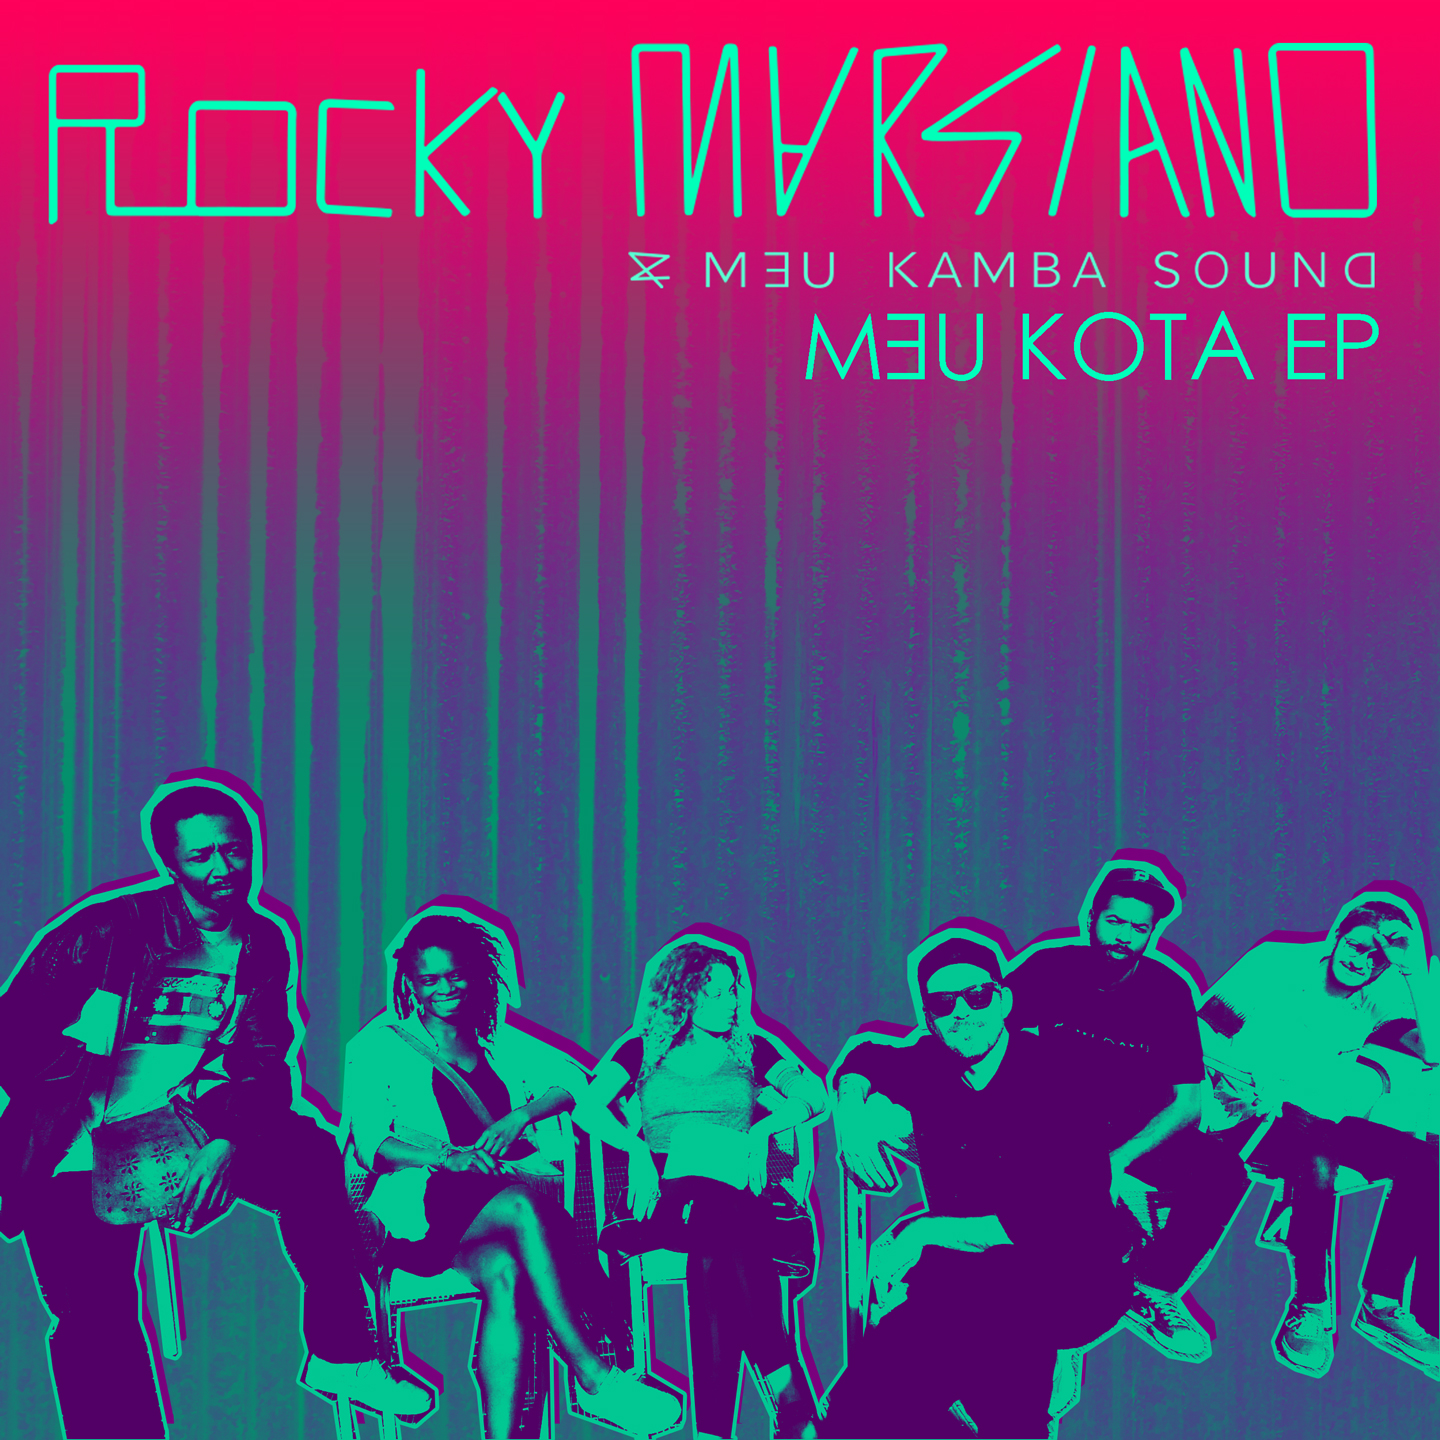 Rocky Marsiano & Meu Kamba Sound - Meu Kota EP